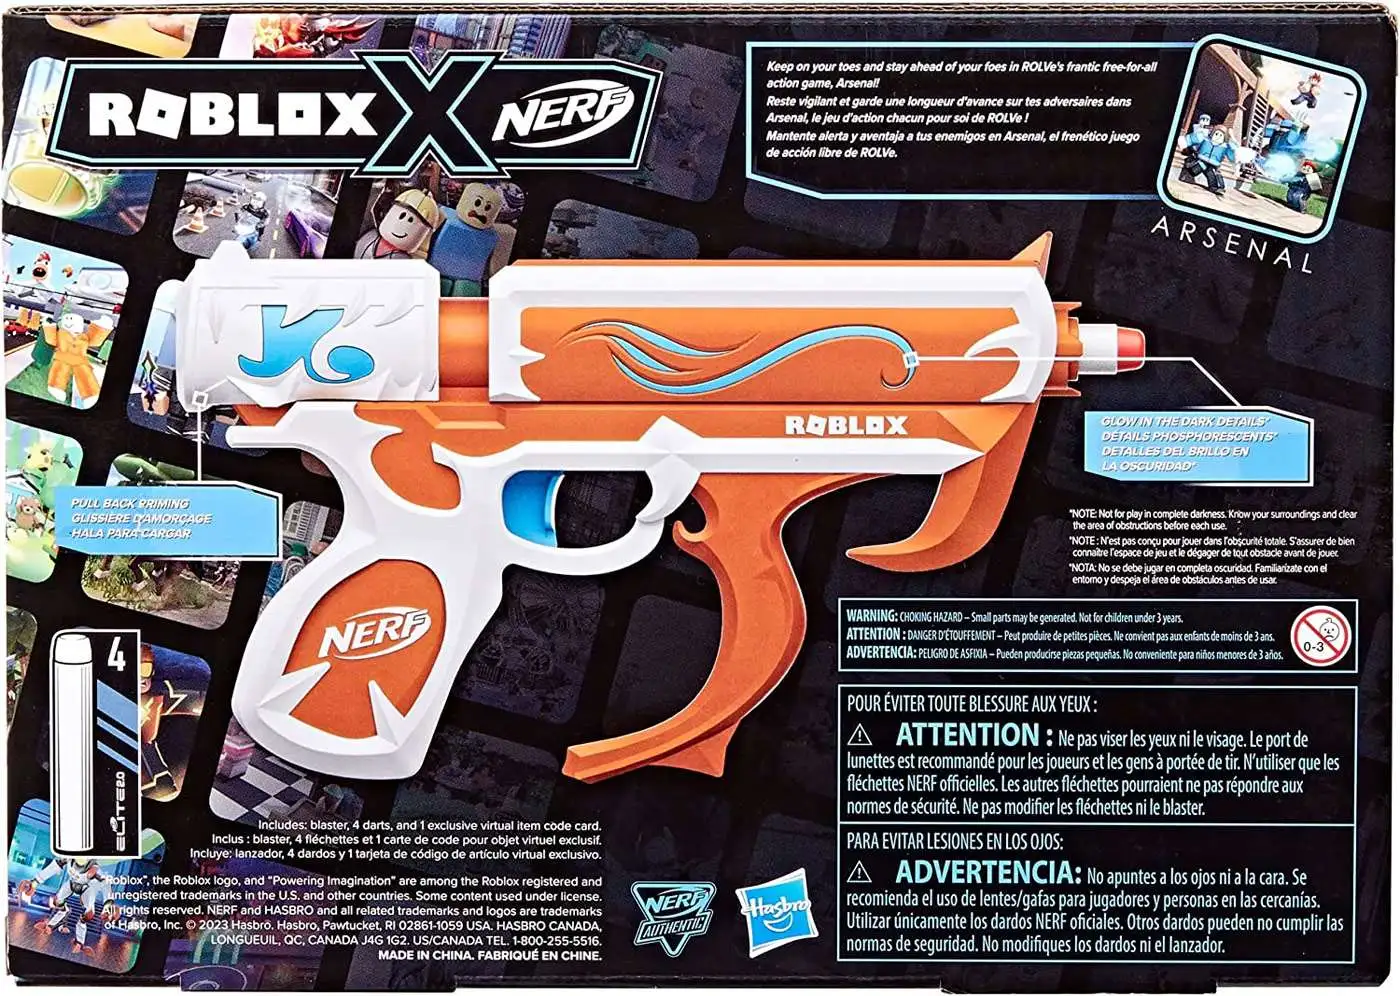 Nerf Roblox Arsenal Soul Catalyst Glow-in-the-Dark Dart Blaster GUN ONLY NO  CODE